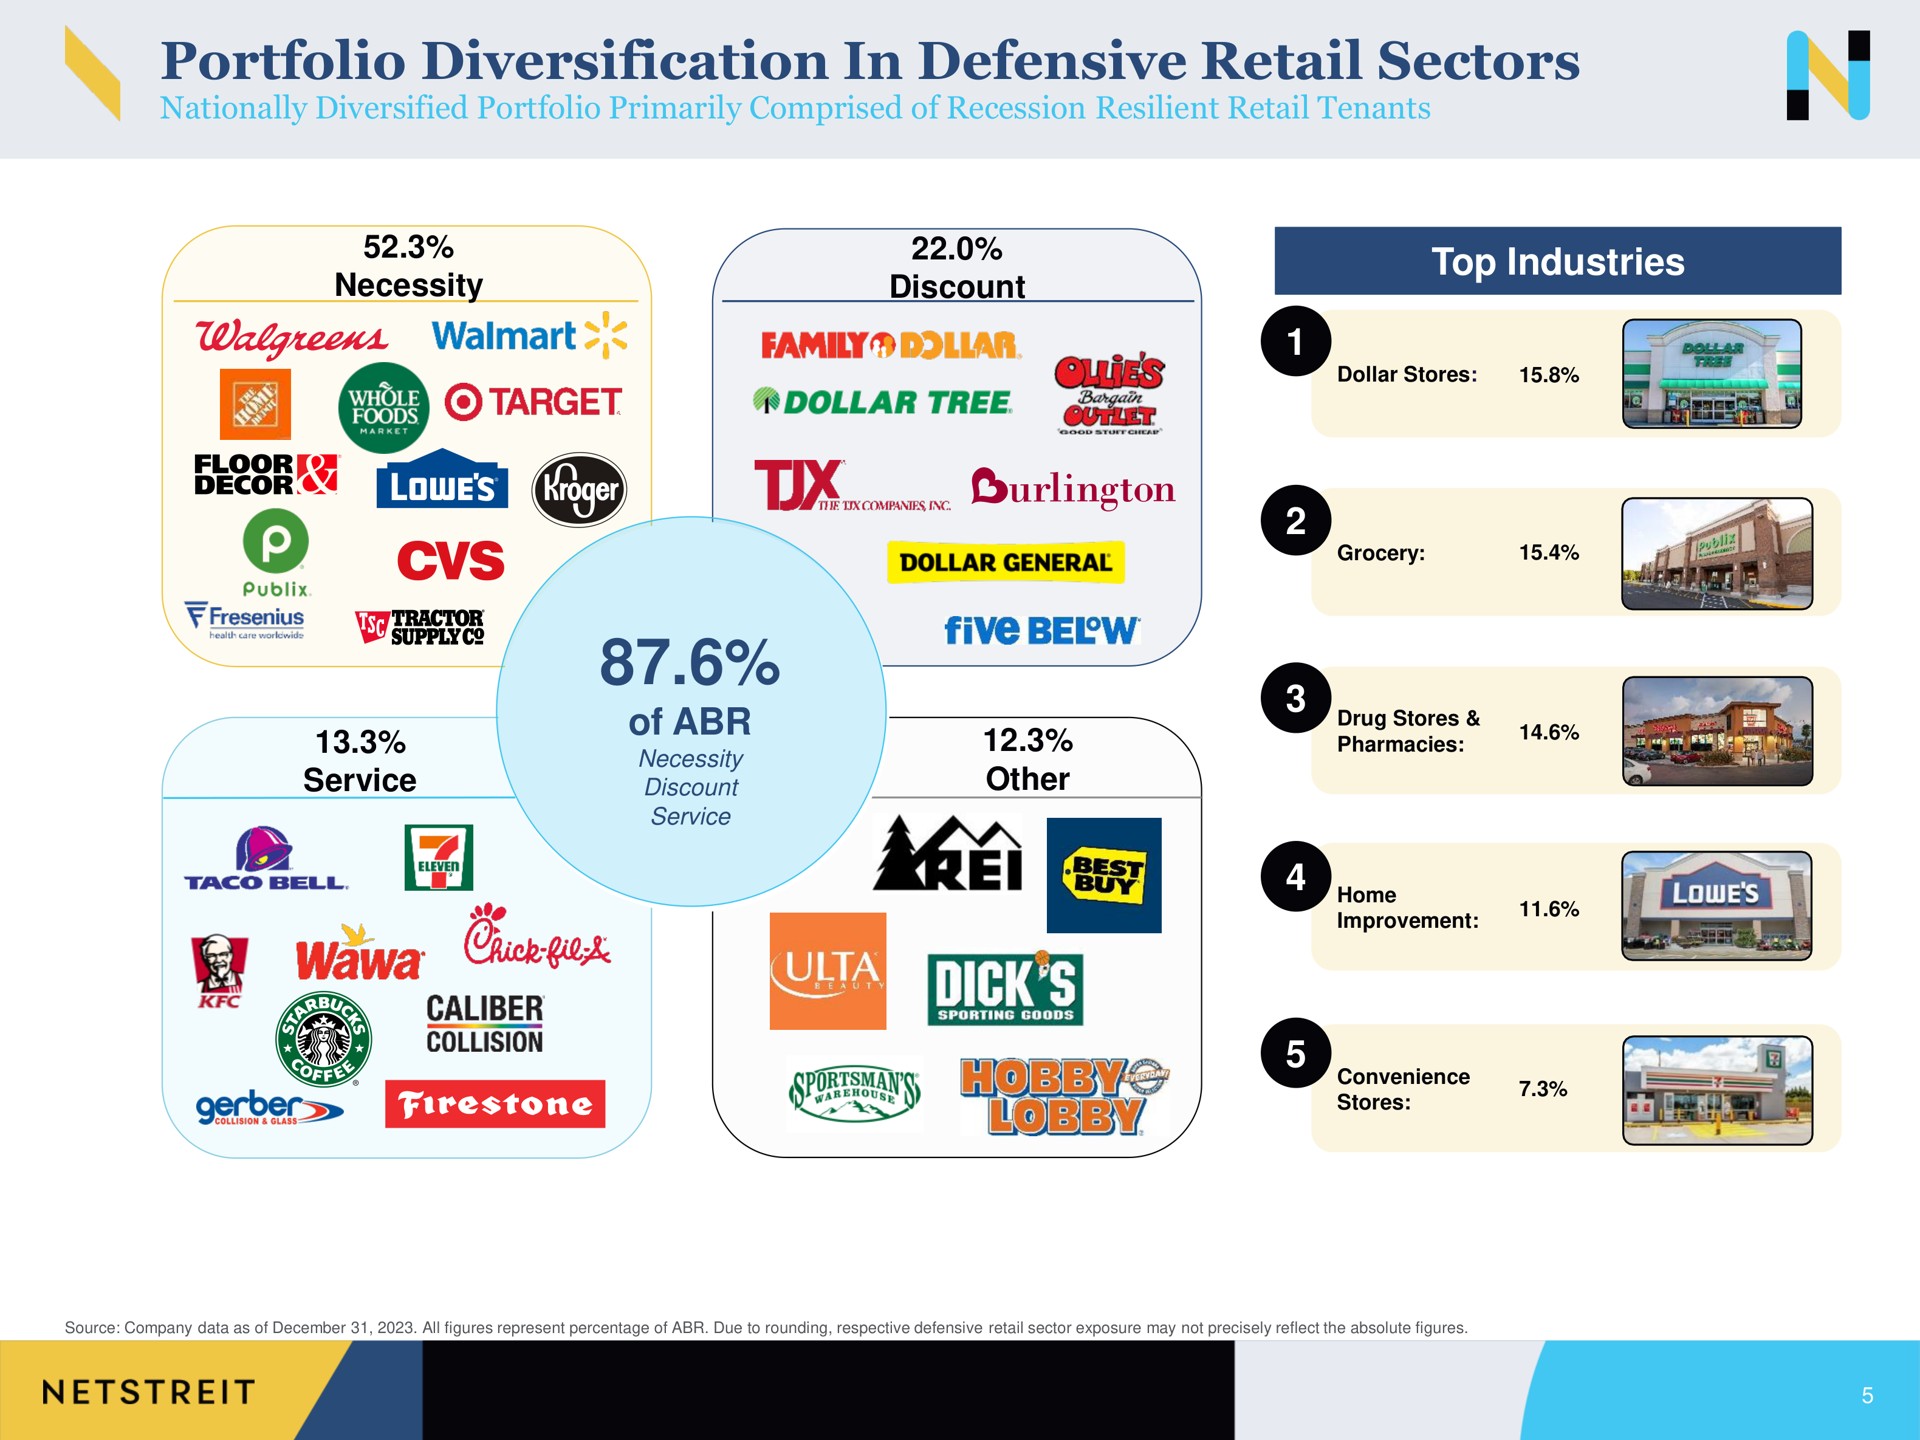 portfolio diversification in defensive retail sectors of top industries target wawa dollar tree pharmacies | Netstreit